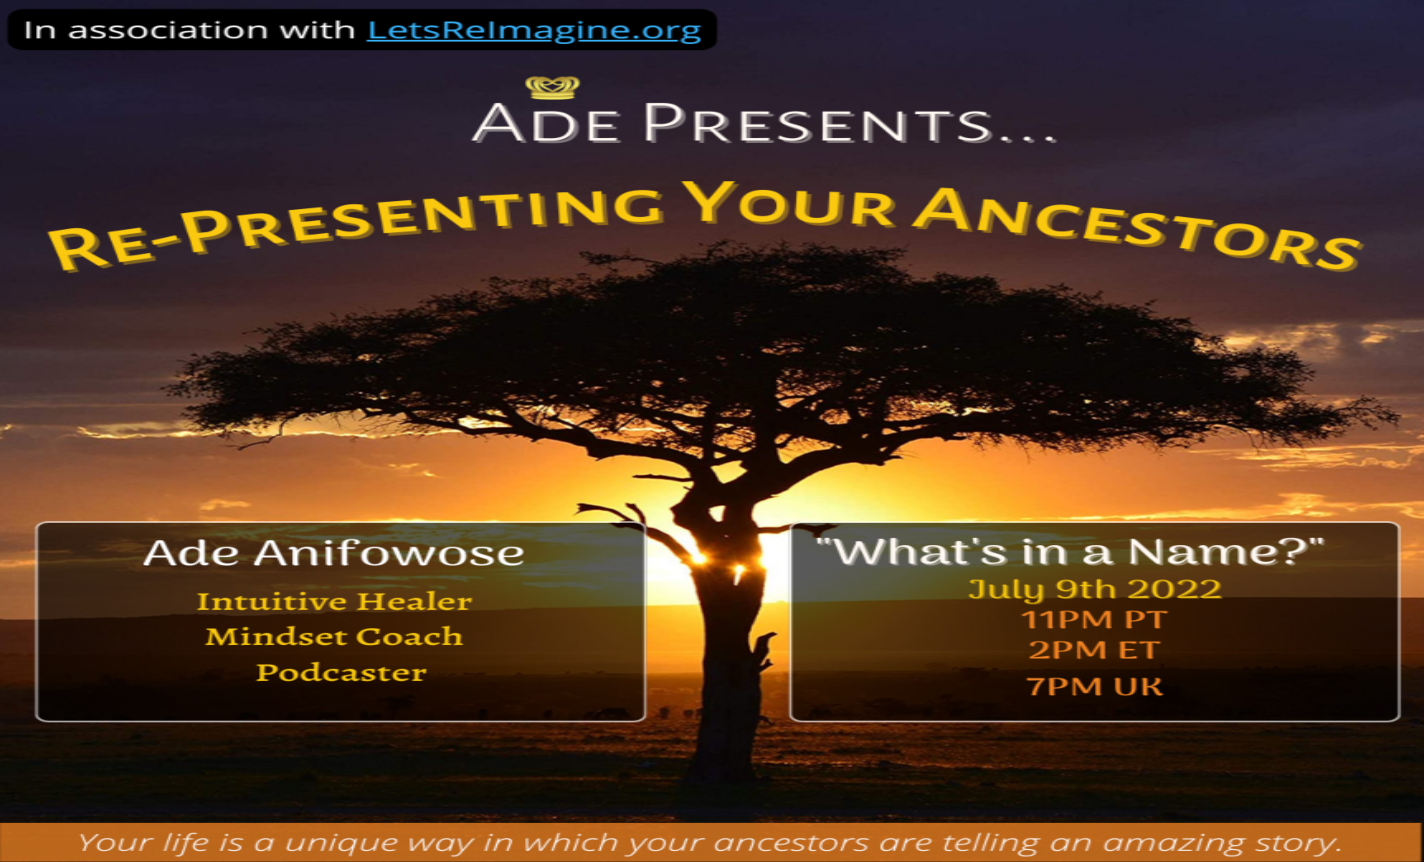 Re-Presenting Your Ancestors